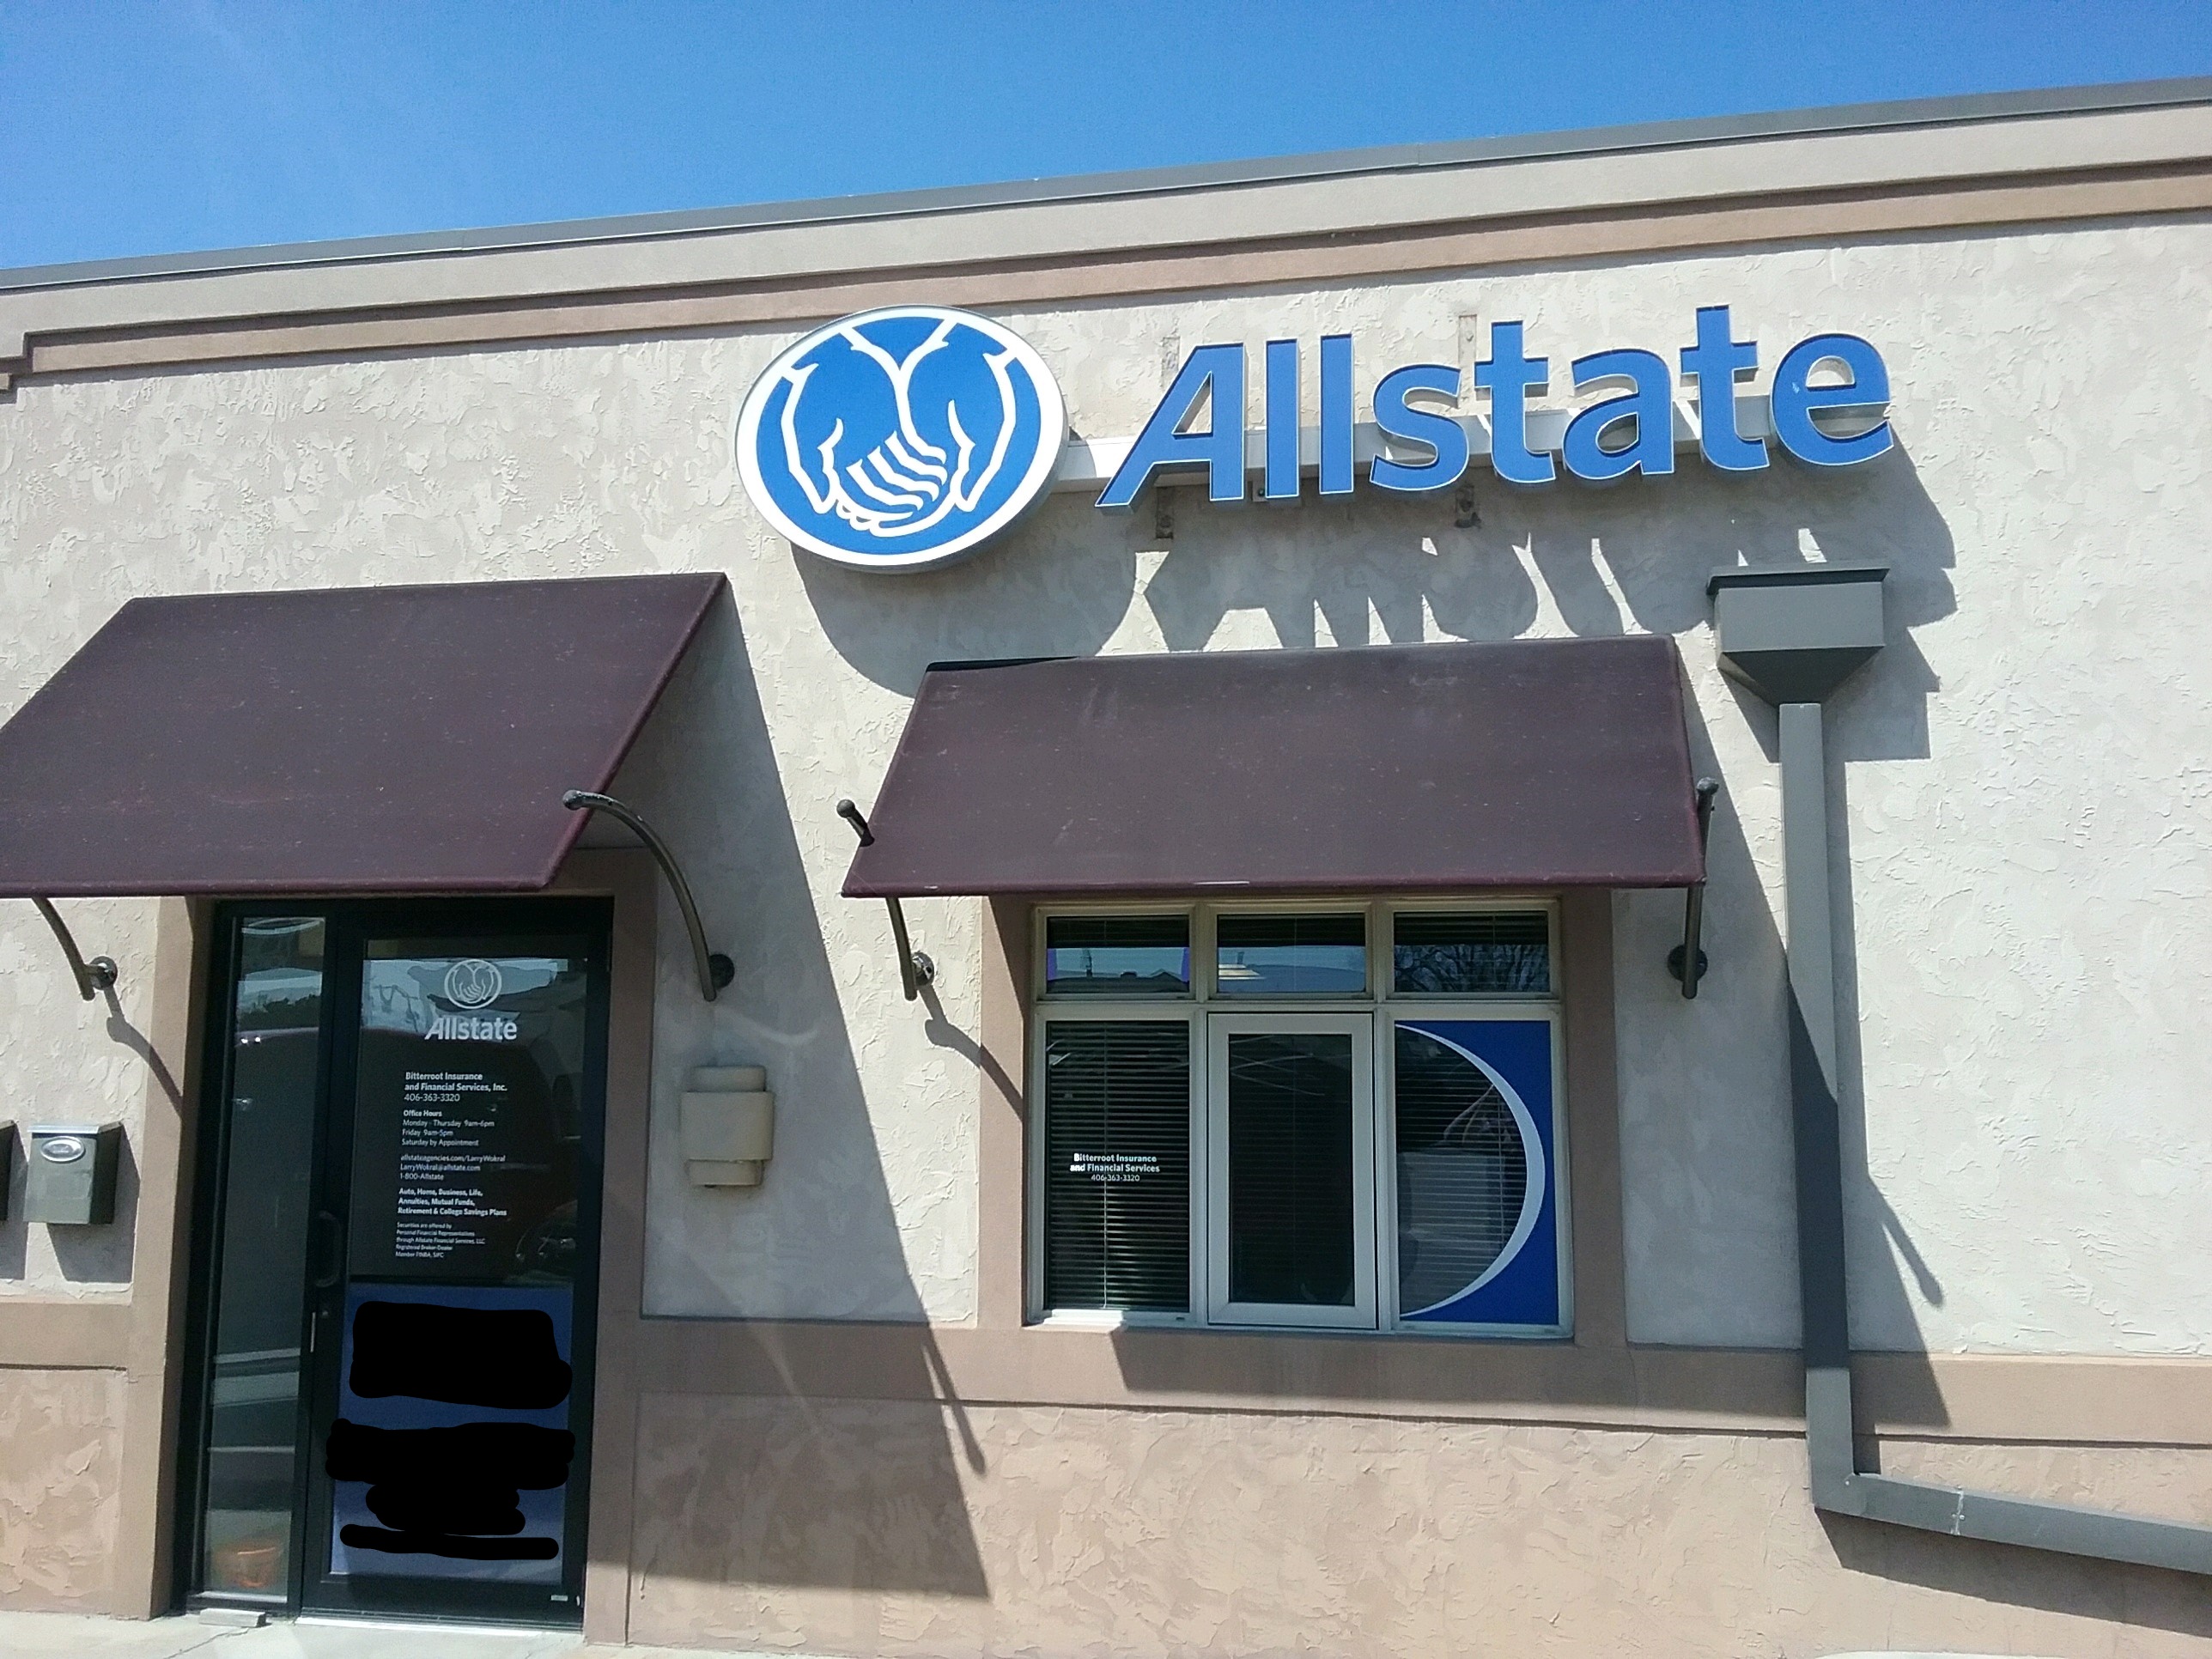 Larry Wokral: Allstate Insurance Photo